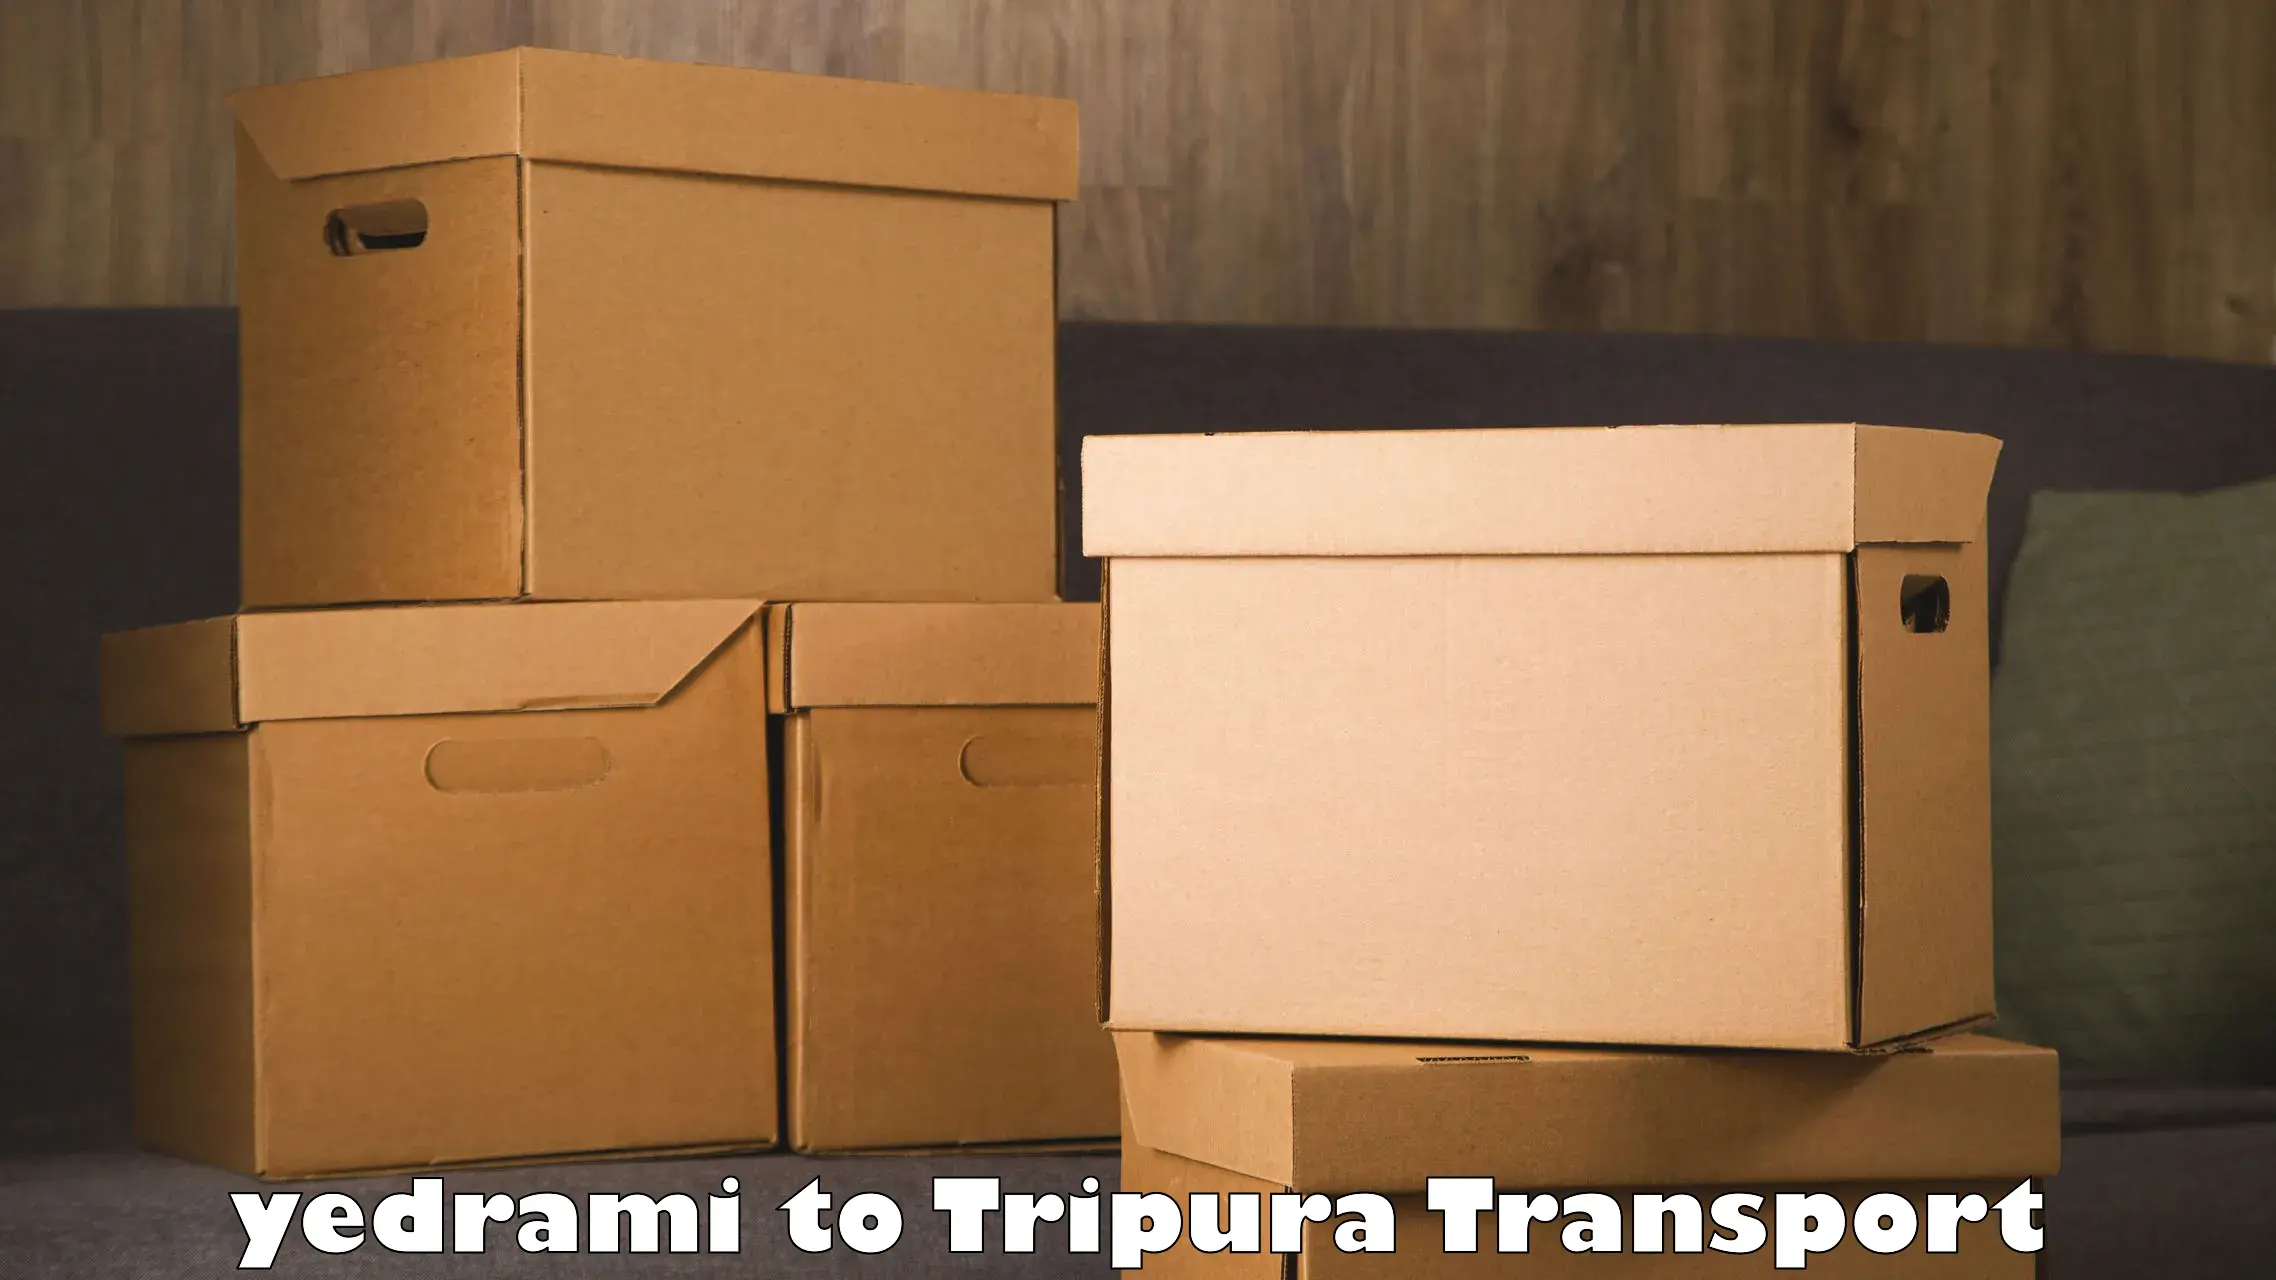 Truck transport companies in India in yedrami to Udaipur Tripura